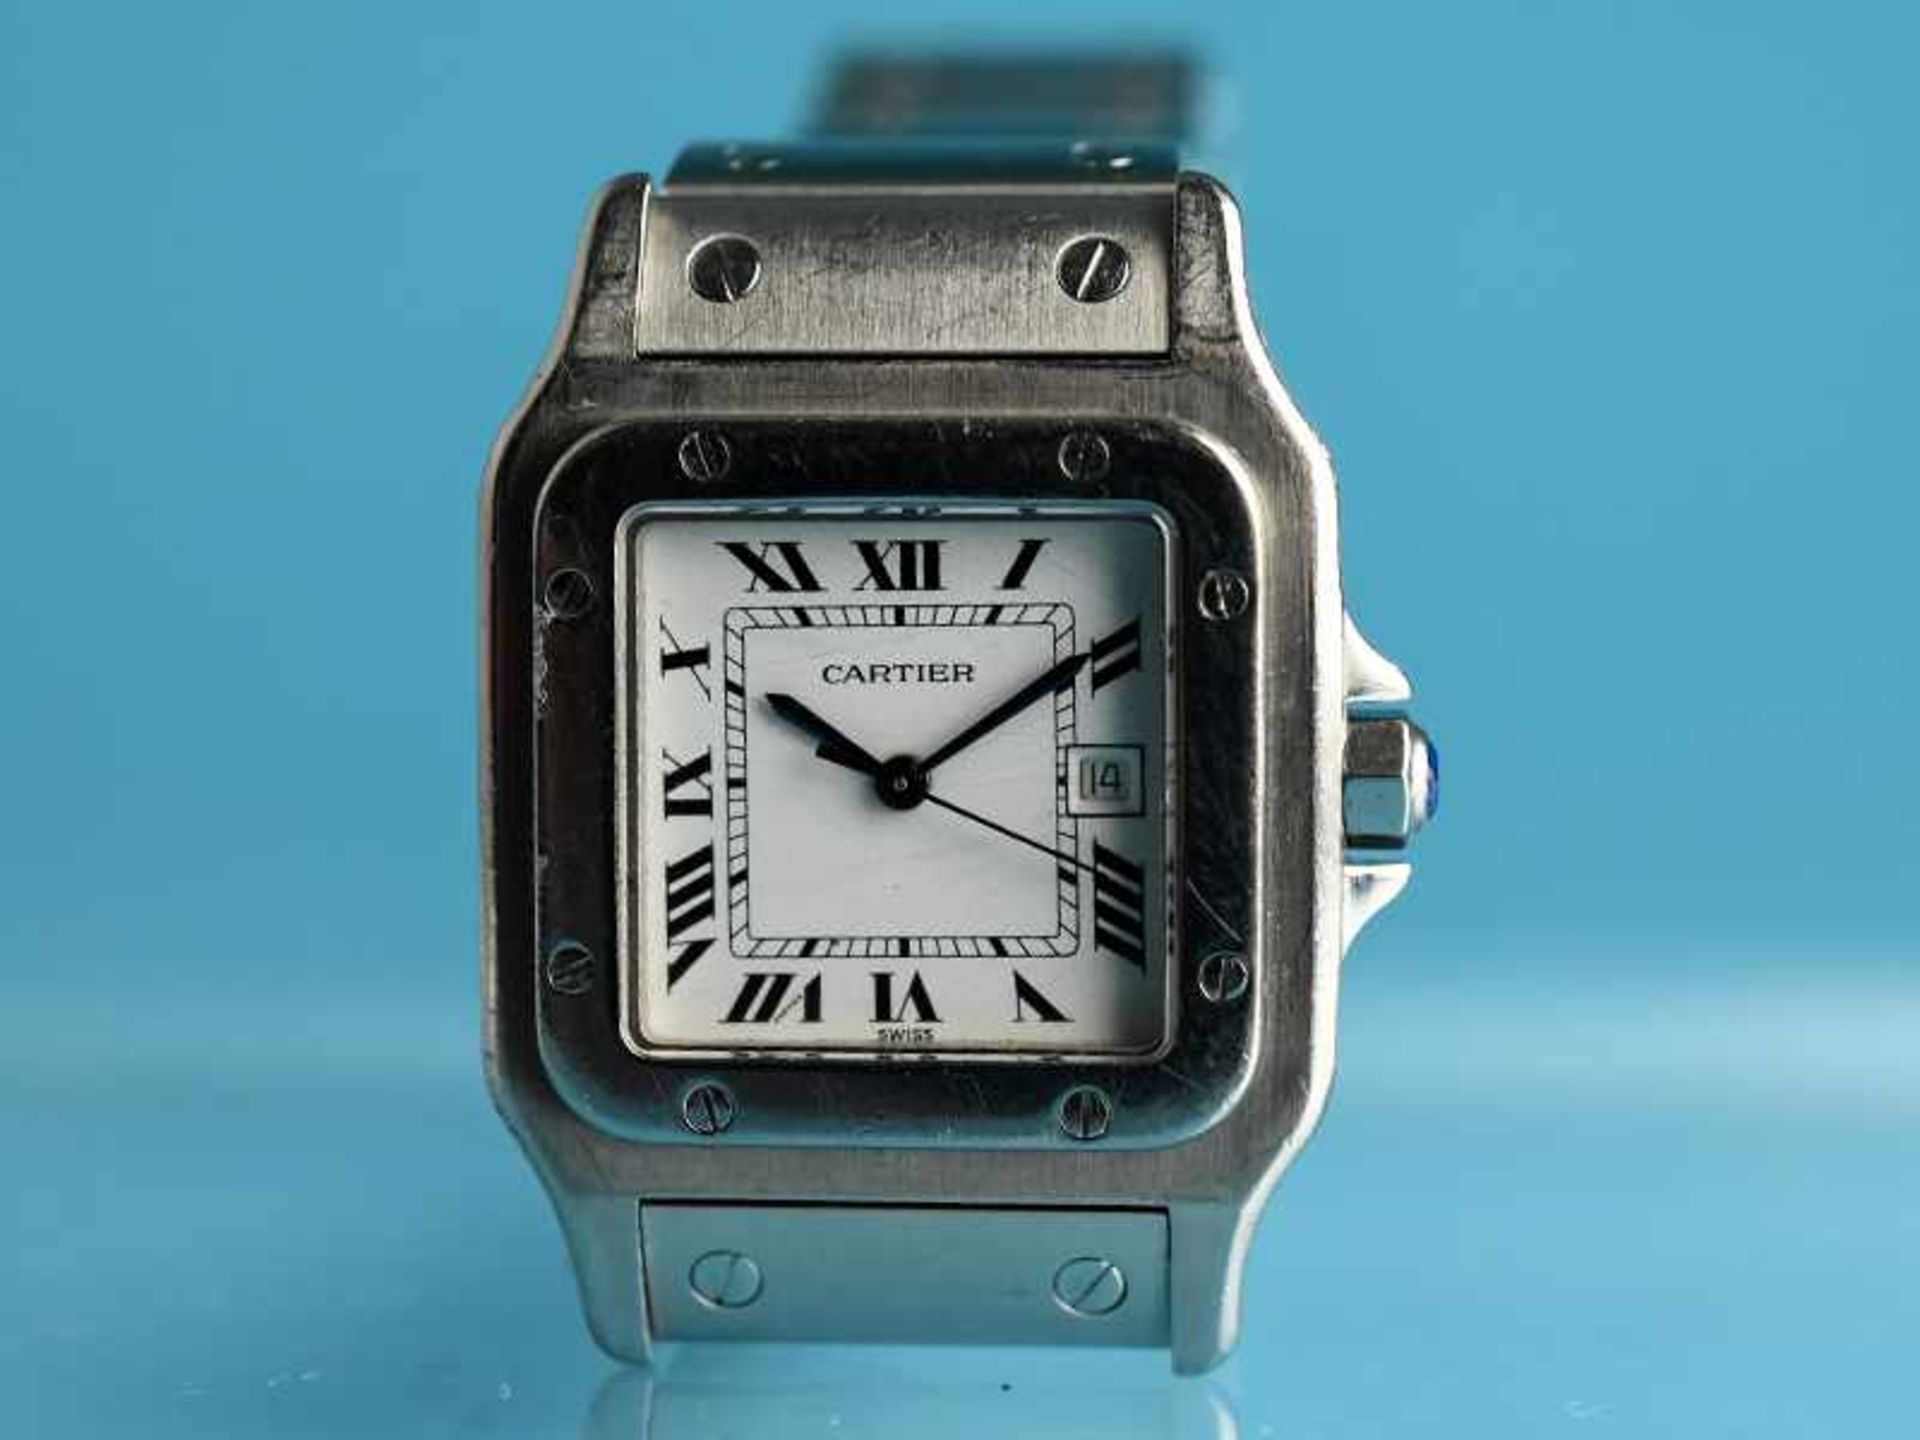 Armbanduhr, Modell Santos, Cartier, Paris, 21. Jh. Edelstahl. Automatik. Saphirglas. Weißes